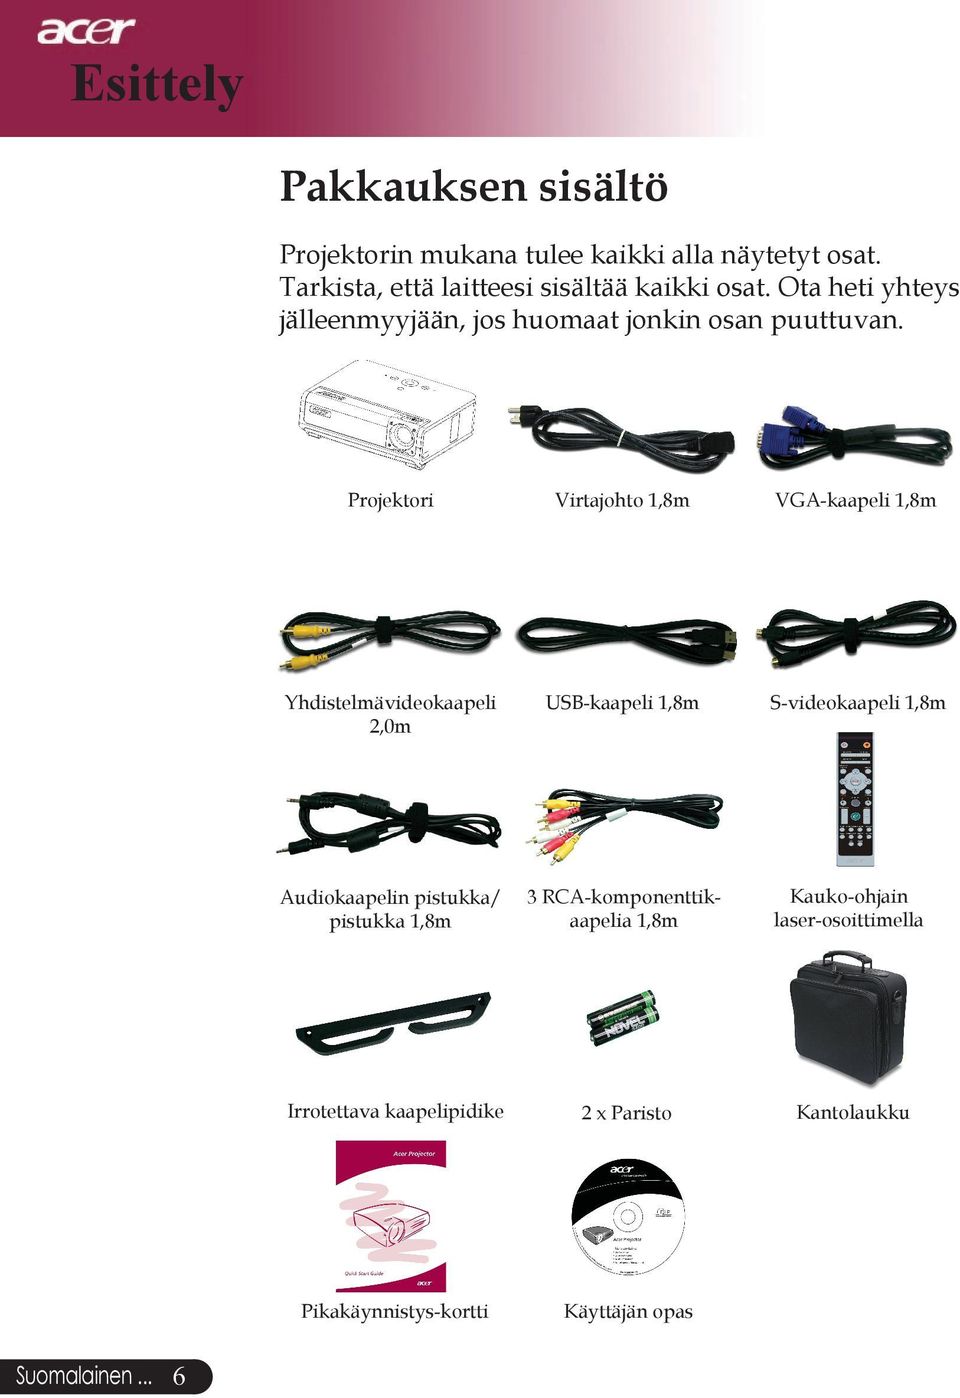 .. Projektori Virtajohto 1,8m VGA-kaapeli 1,8m Yhdistelmävideokaapeli 2,0m USB-kaapeli 1,8m S-videokaapeli 1,8m Audiokaapelin